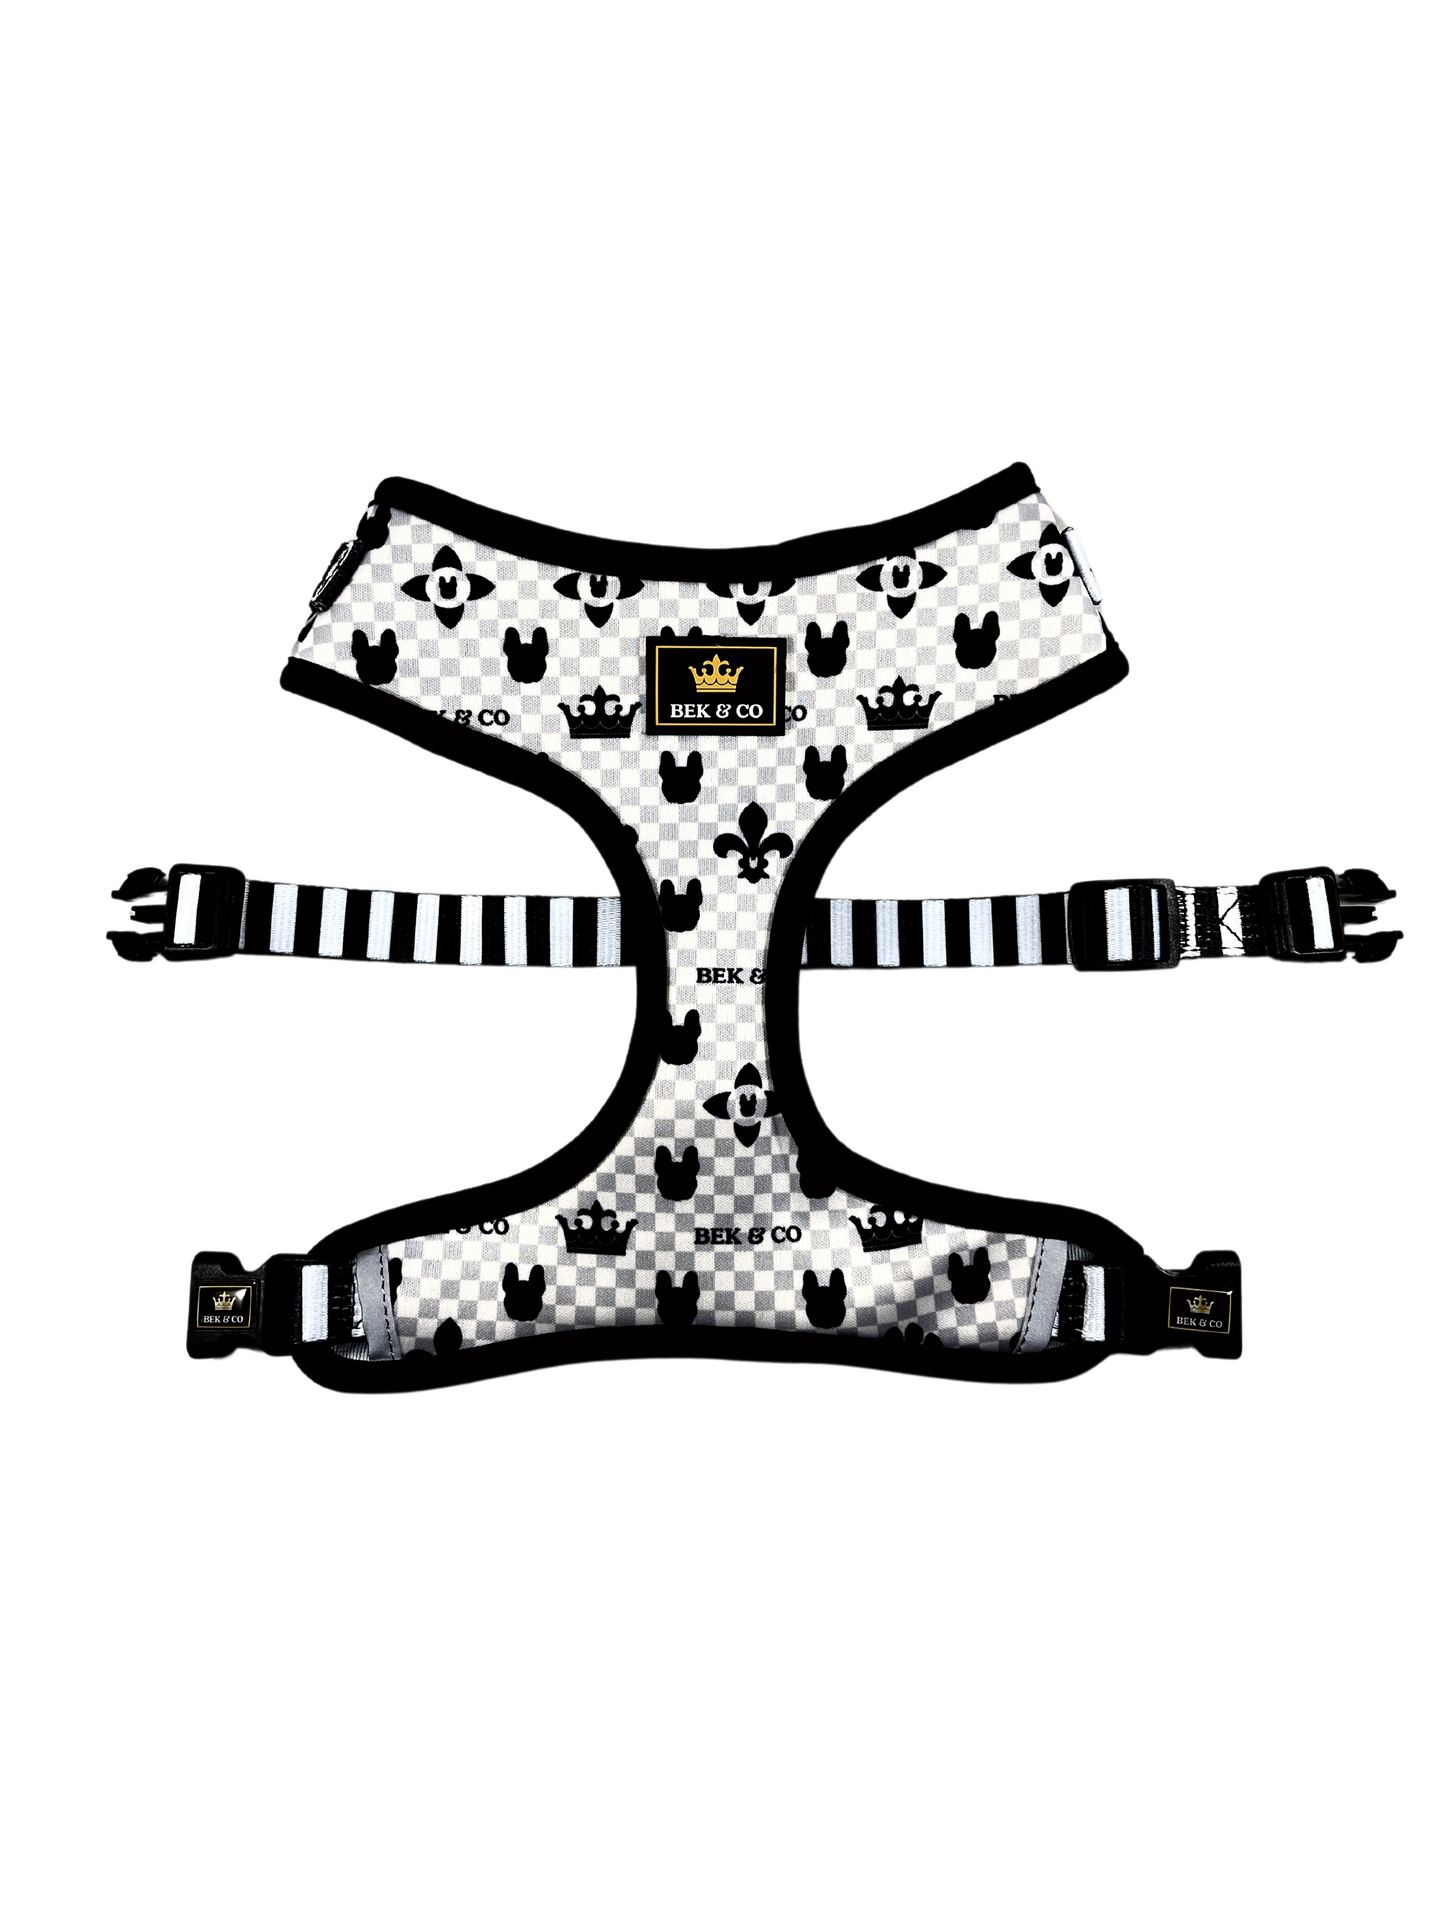 Bek & Co monogram adjustable French Bulldog Harness on white background